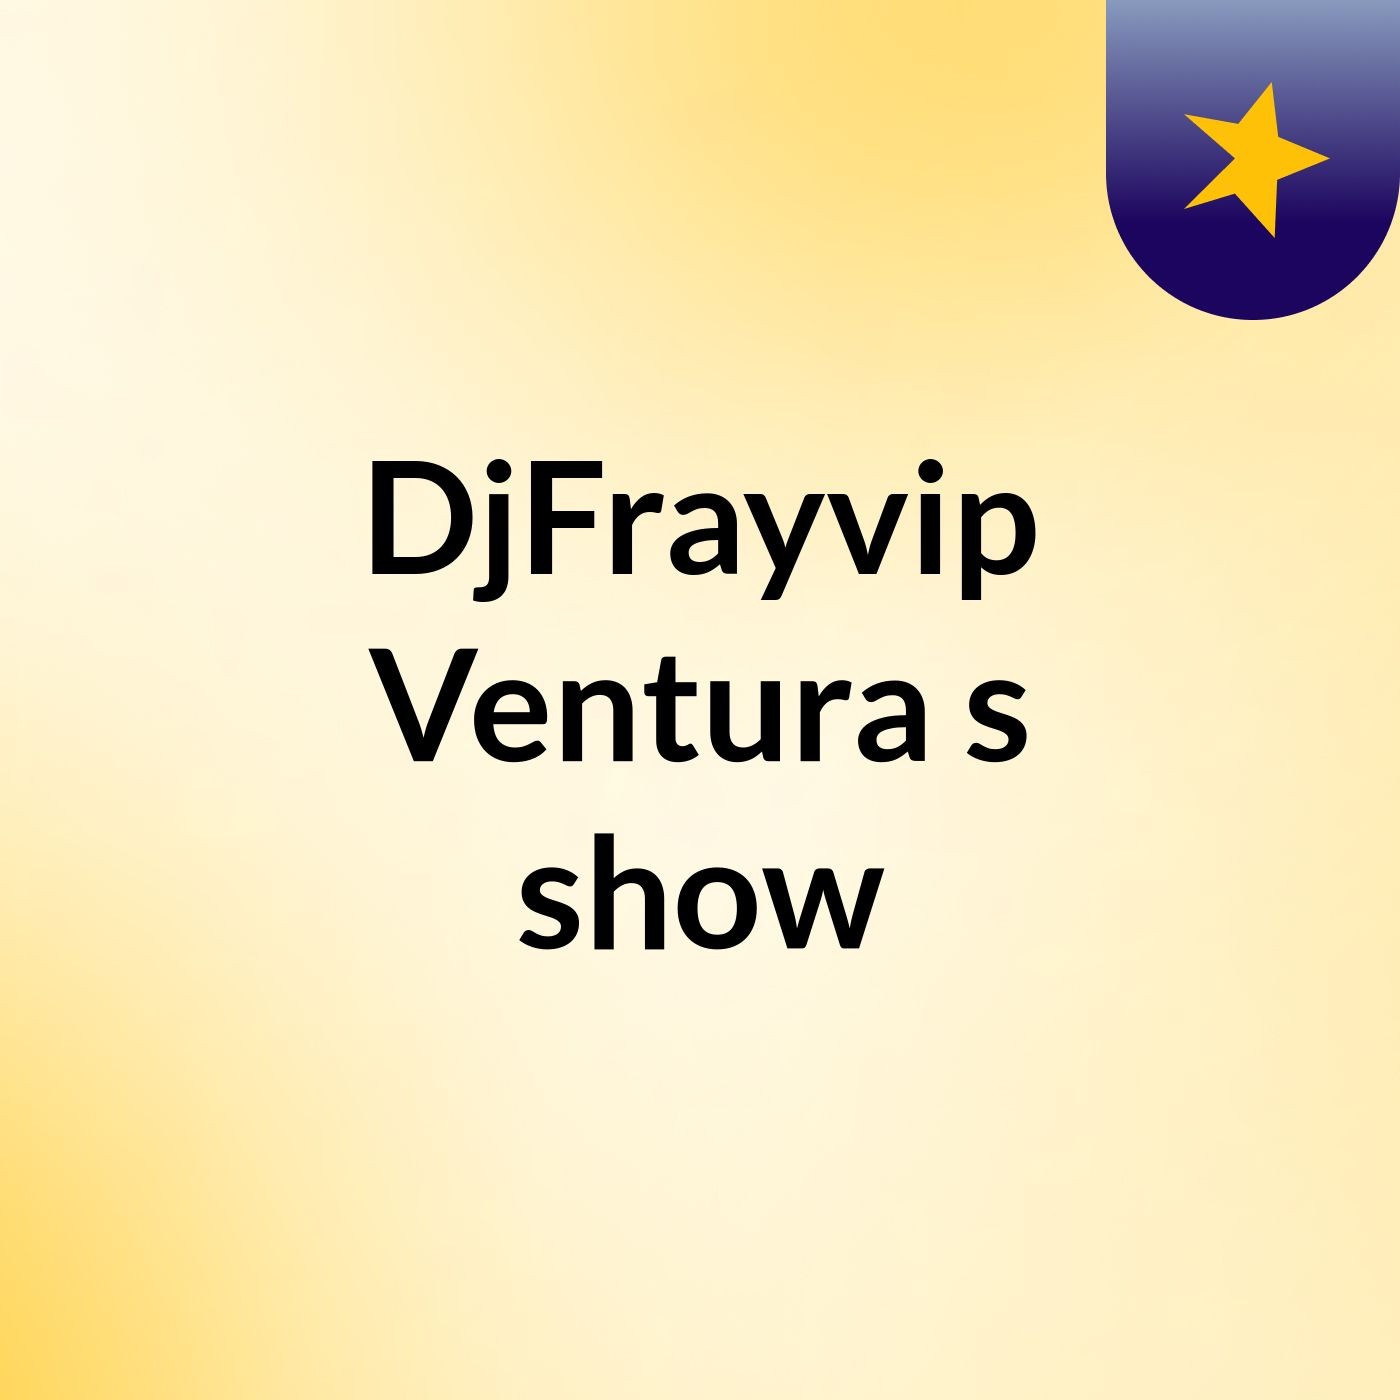 DjFrayvip Ventura's show